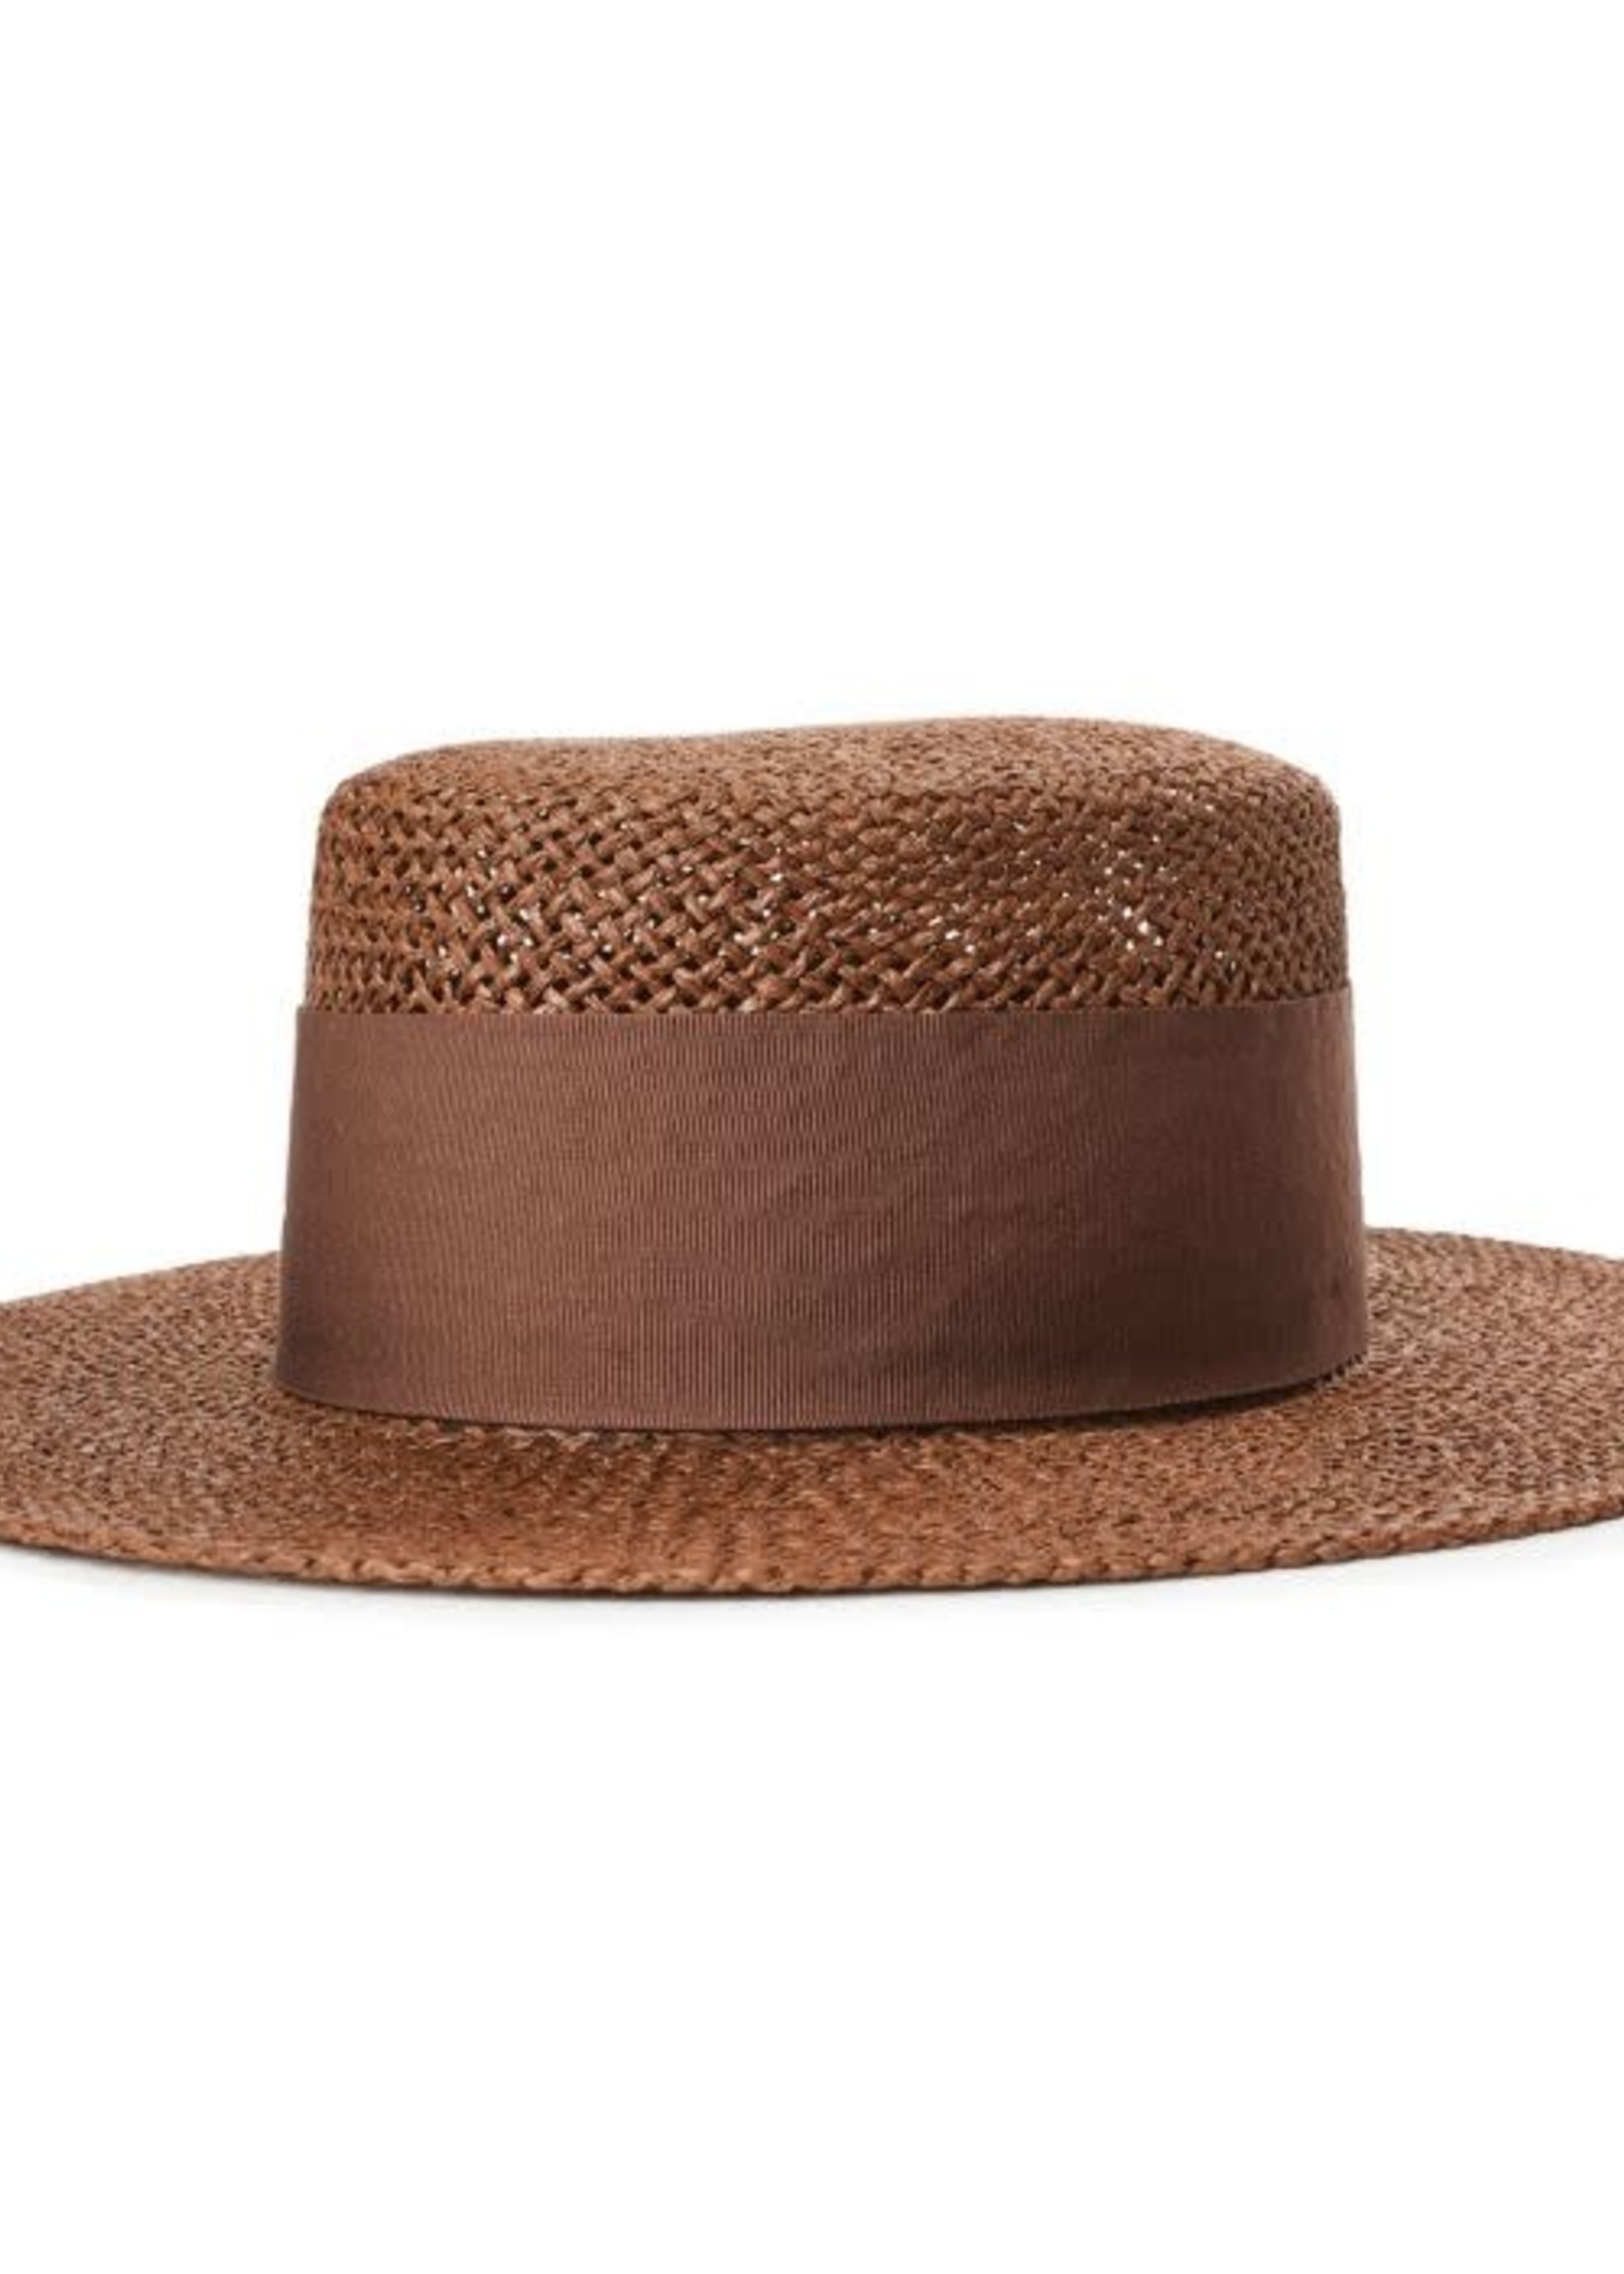 BRIXTON Dara Straw Hat, TAN or BROWN